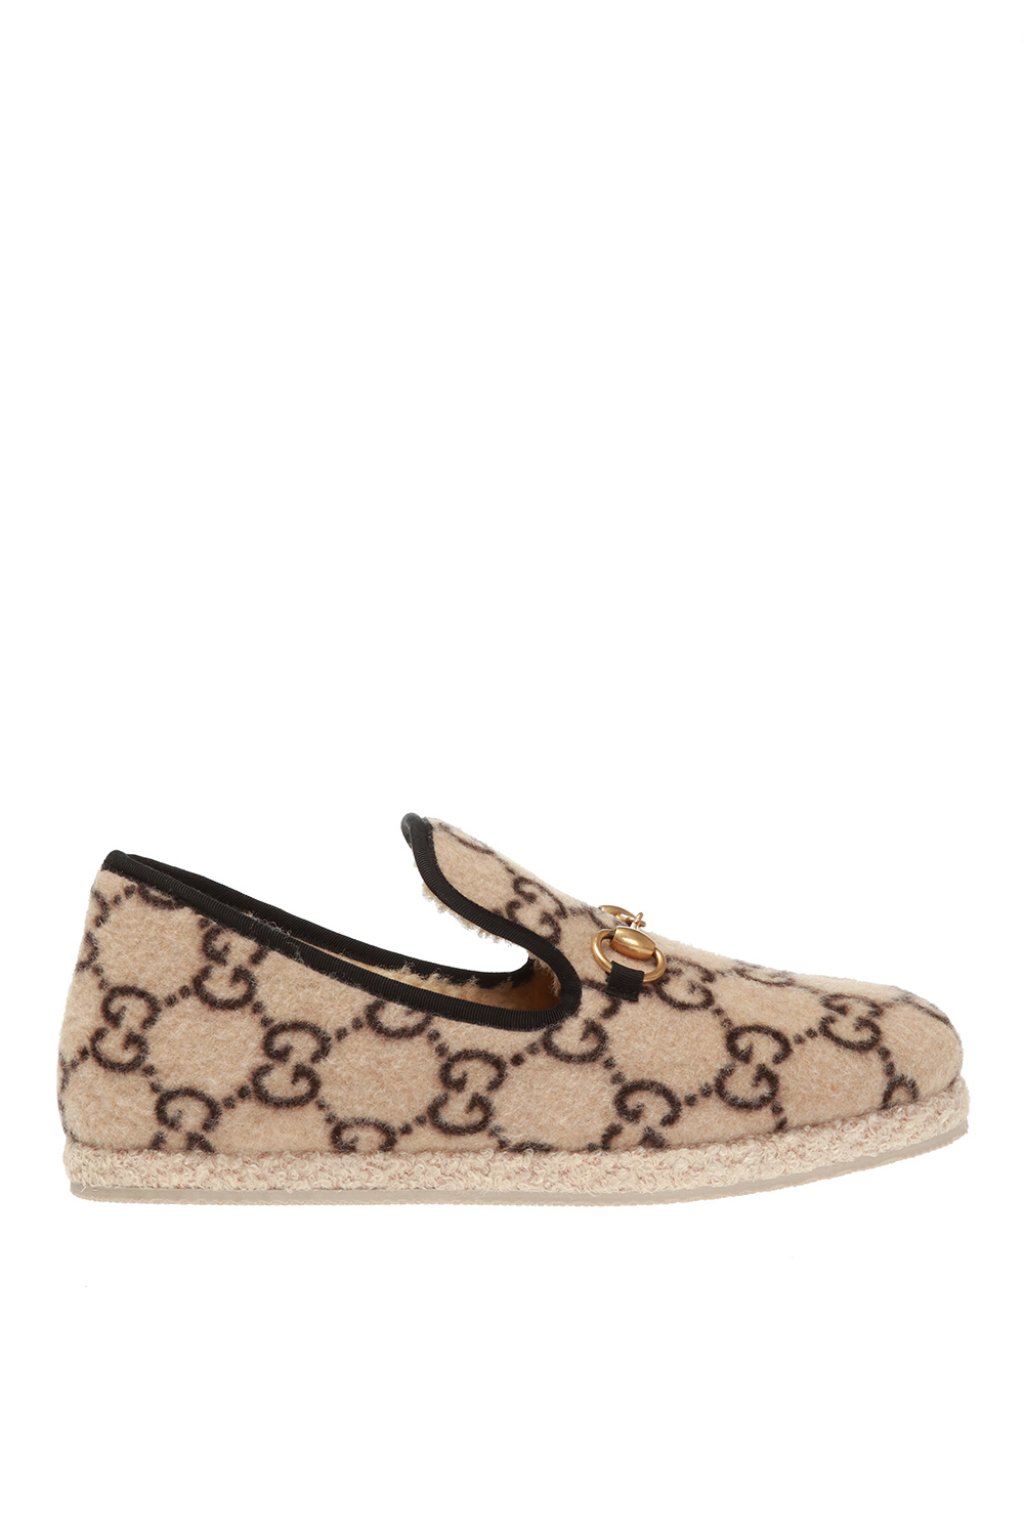 Patterned loafers Gucci - Vitkac US